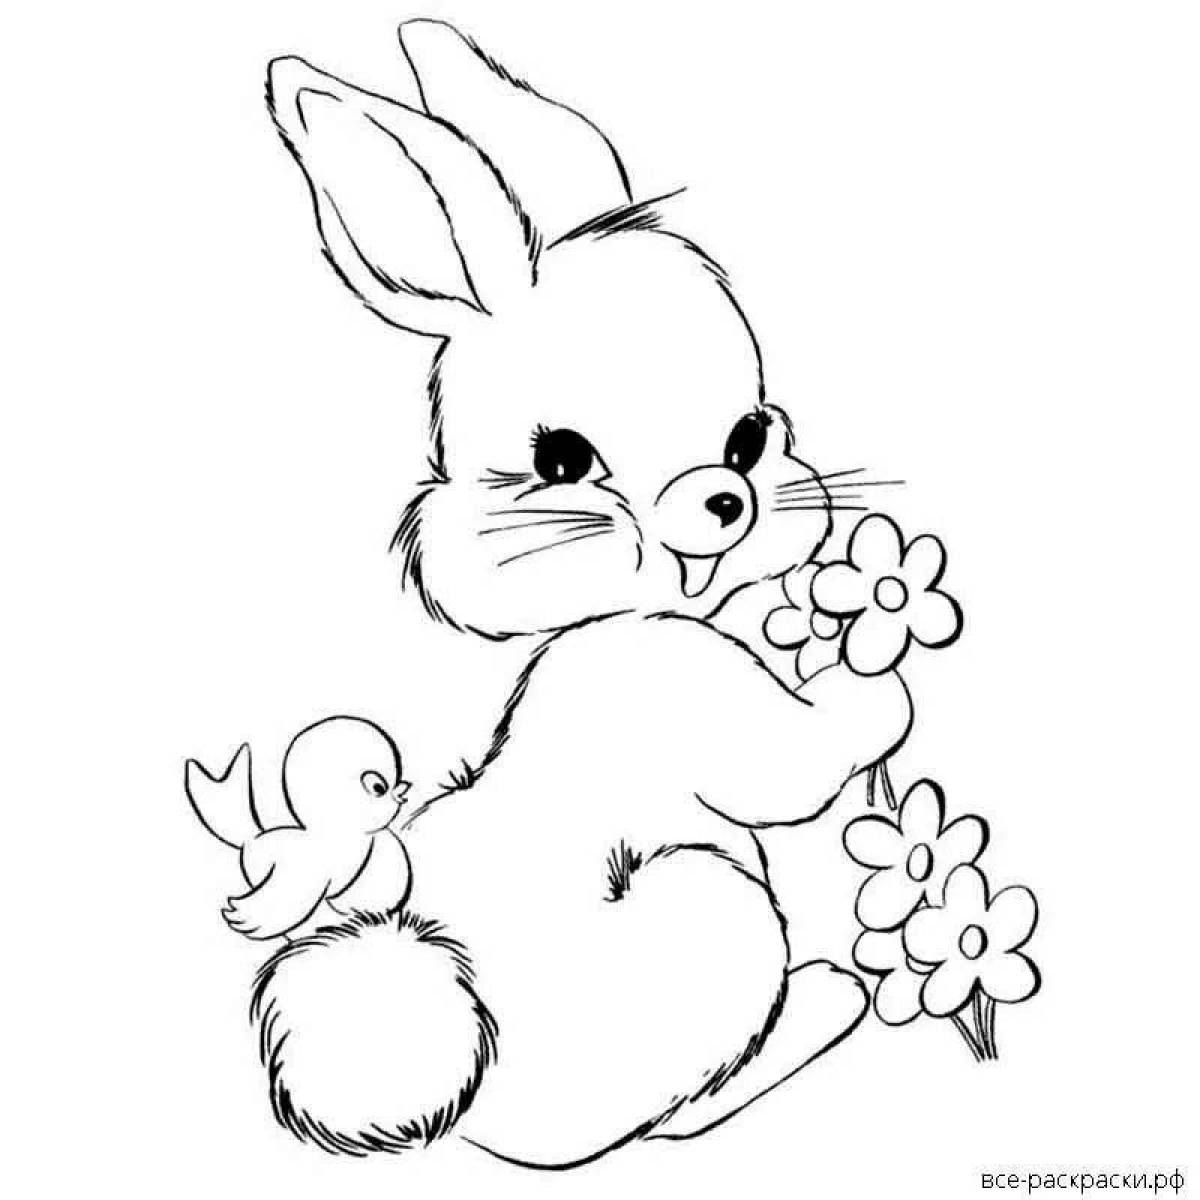 Cute bunny #1